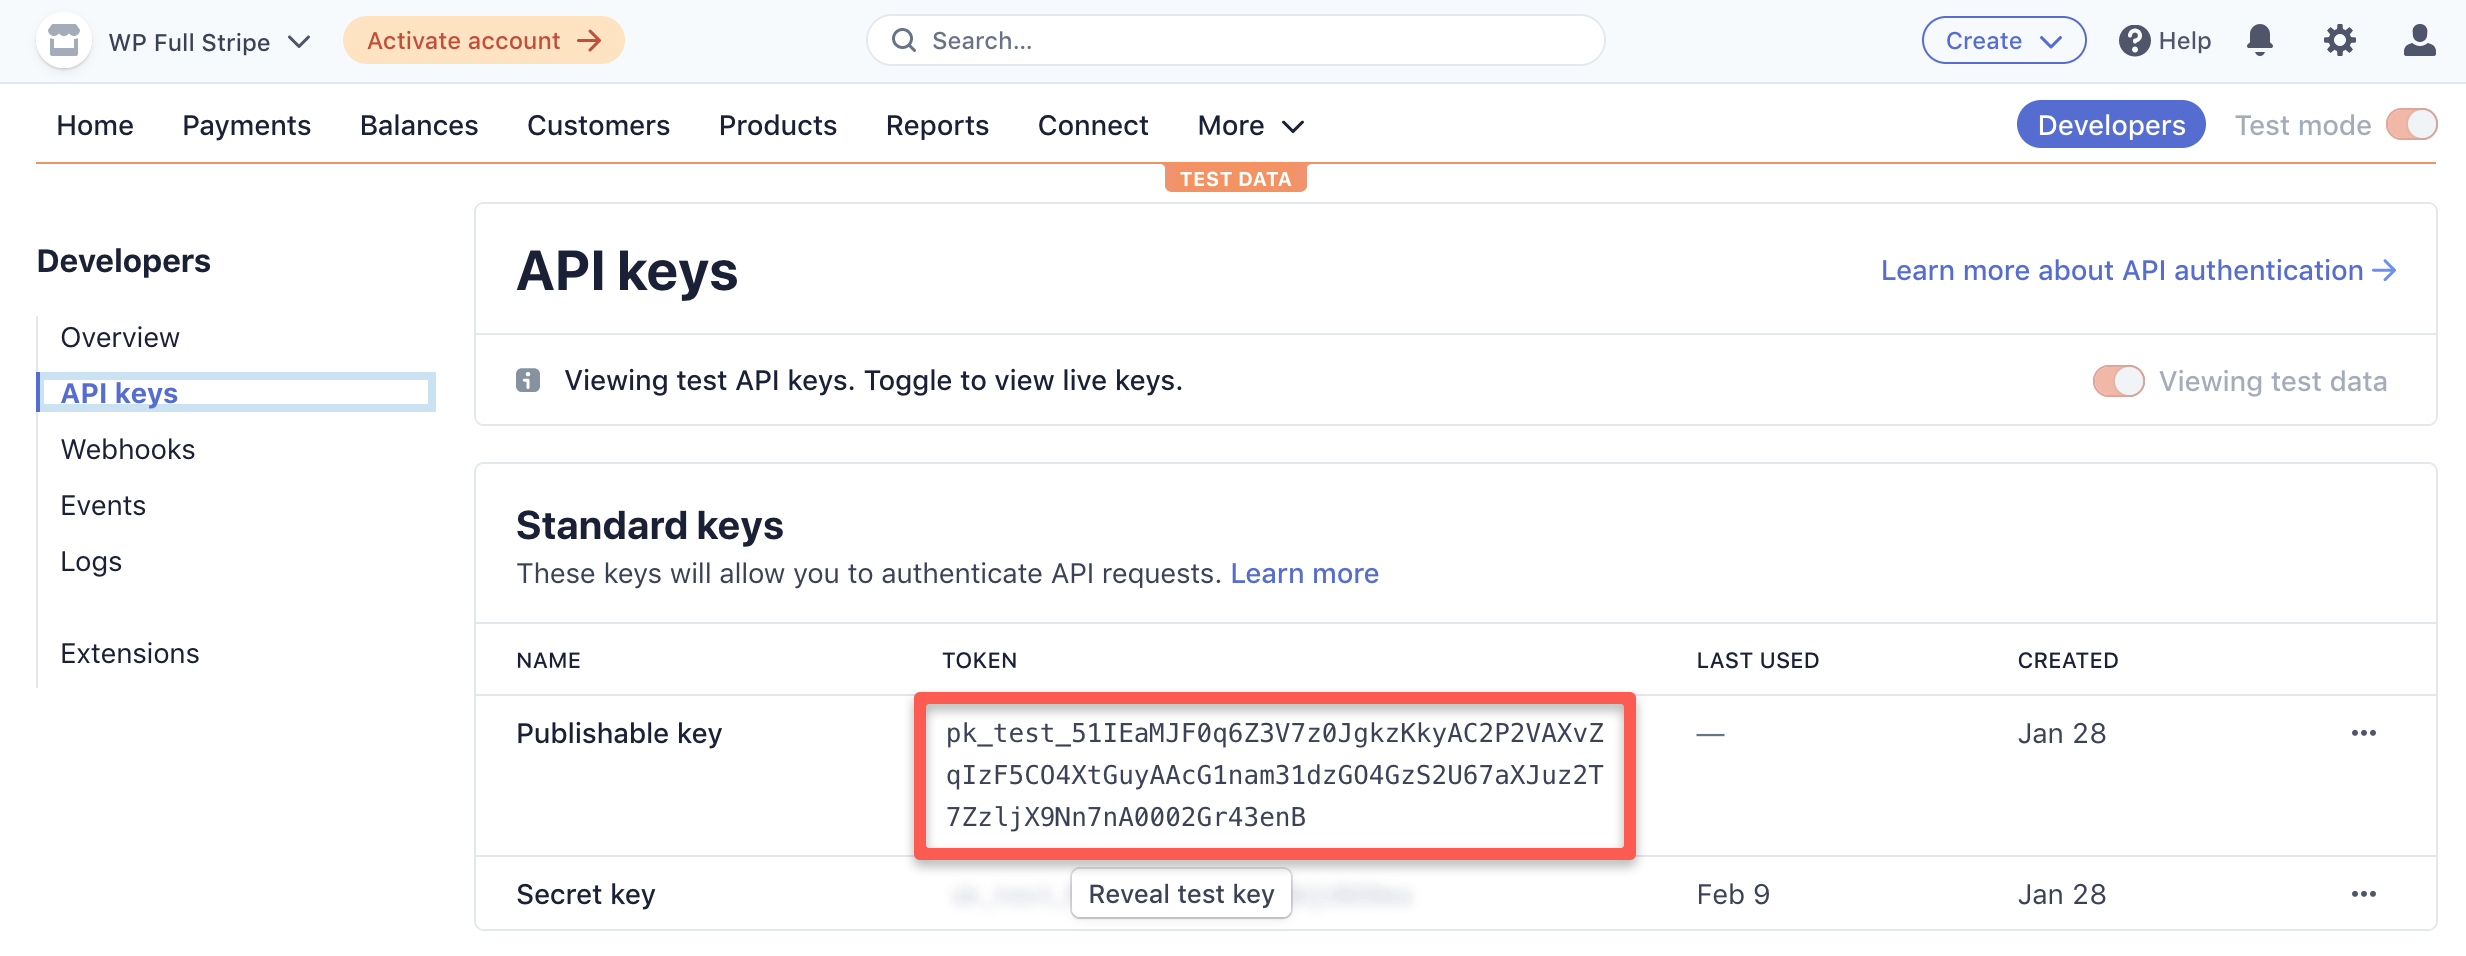 On the “API keys” page, you can find your publishable and secret Stripe API keys.